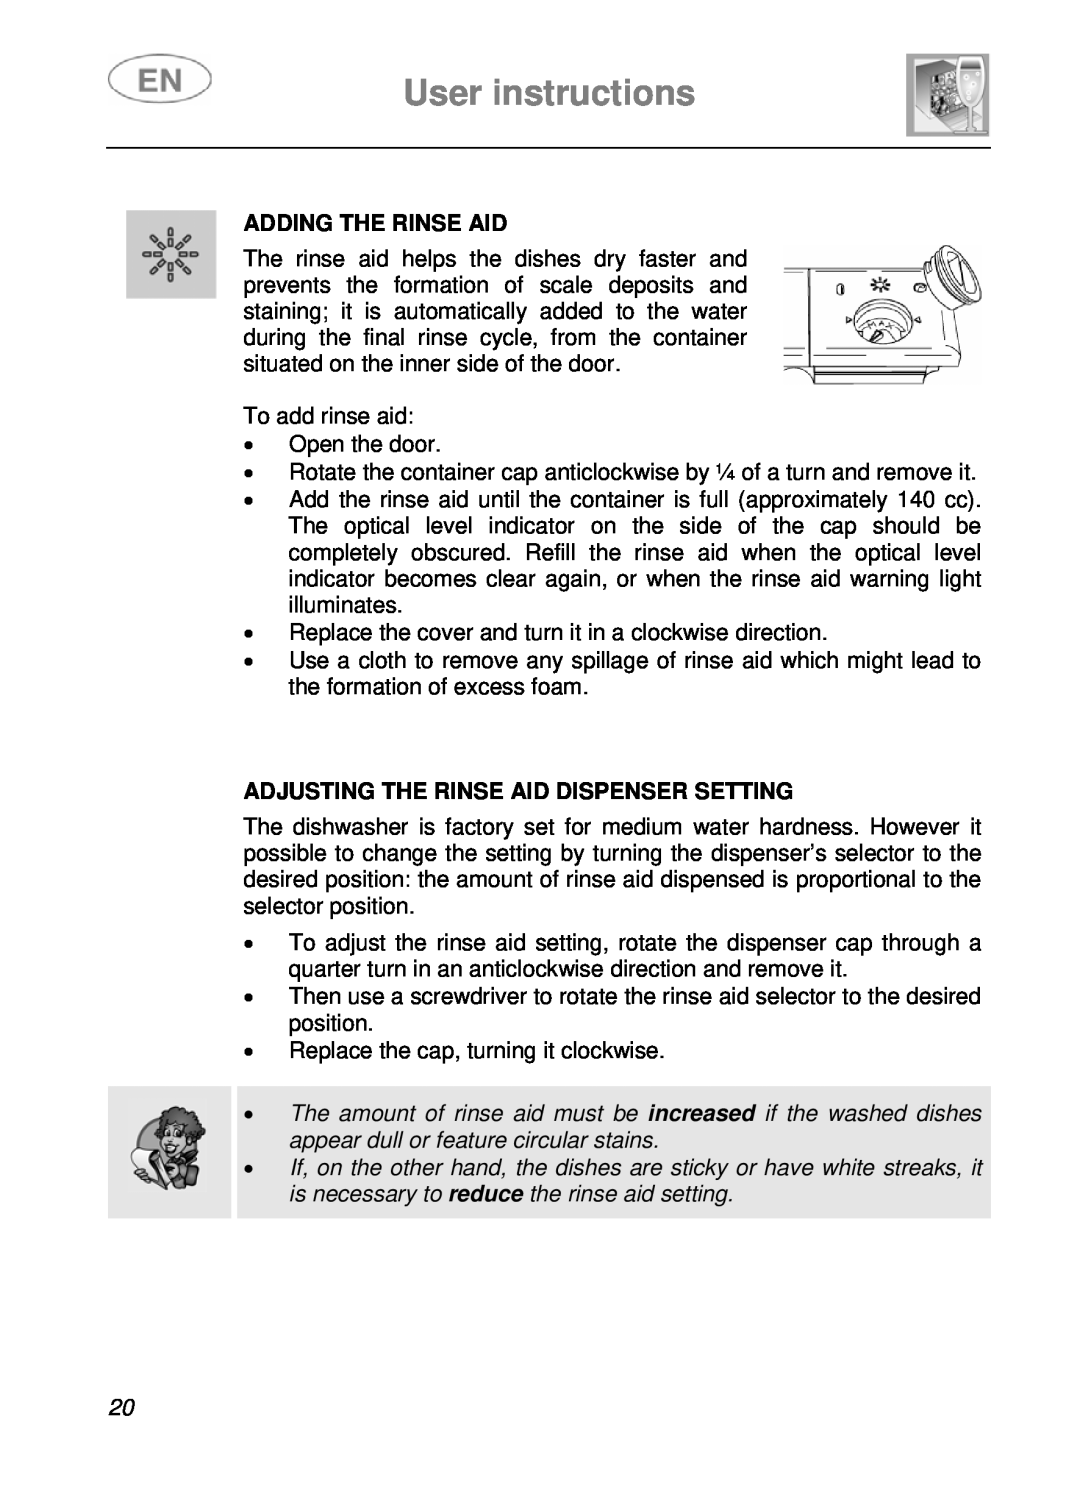 Smeg LVS1449B instruction manual User instructions, Adding The Rinse Aid, Adjusting The Rinse Aid Dispenser Setting 